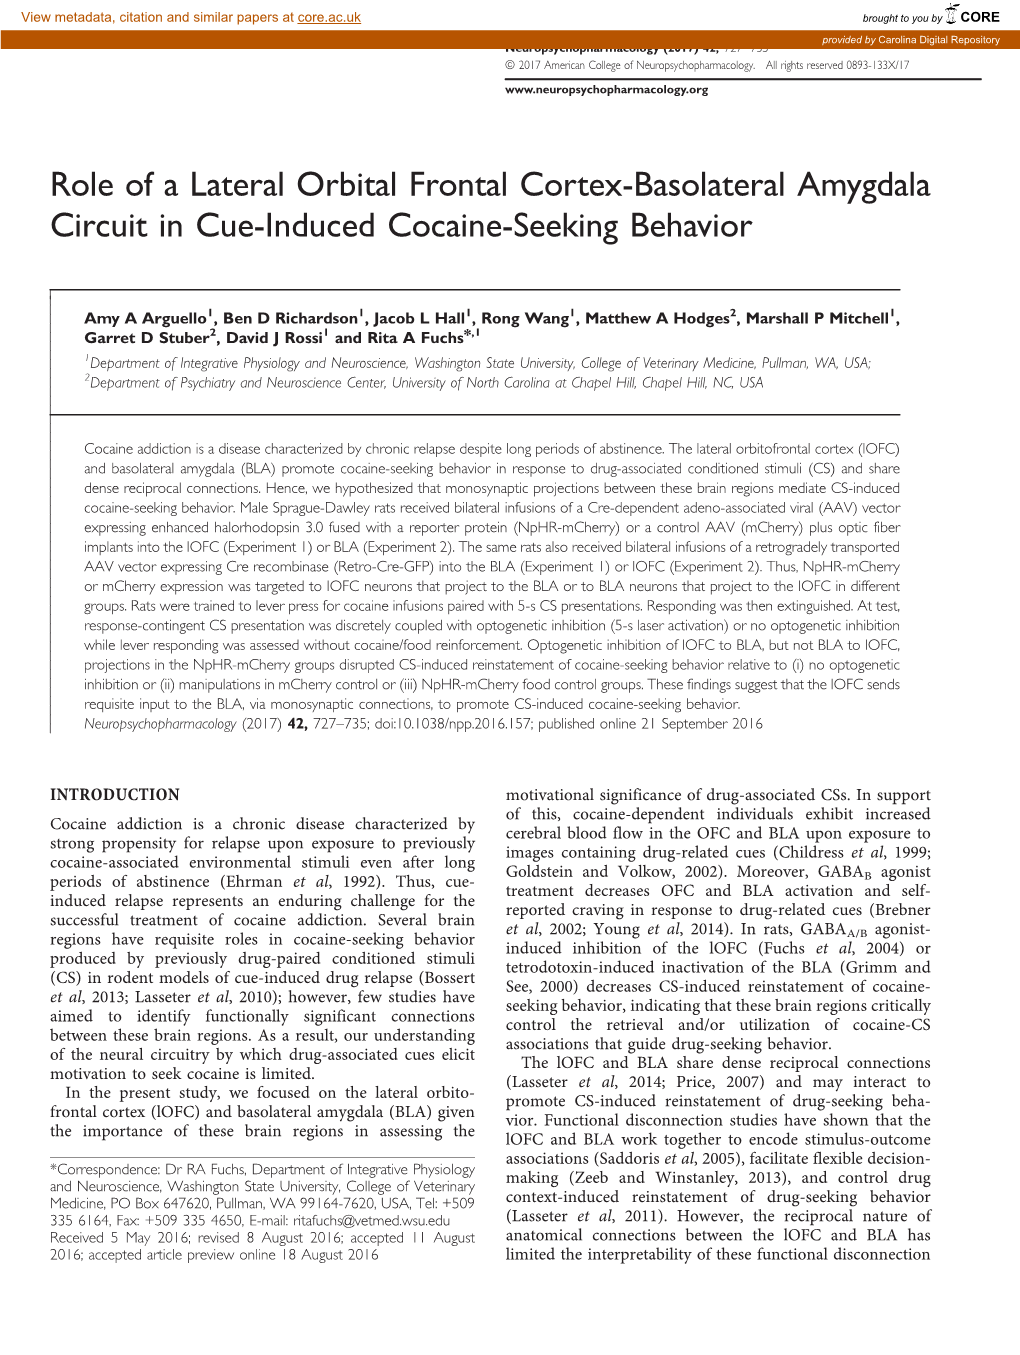 Role of a Lateral Orbital Frontal Cortex-Basolateral Amygdala Circuit in Cue-Induced Cocaine-Seeking Behavior